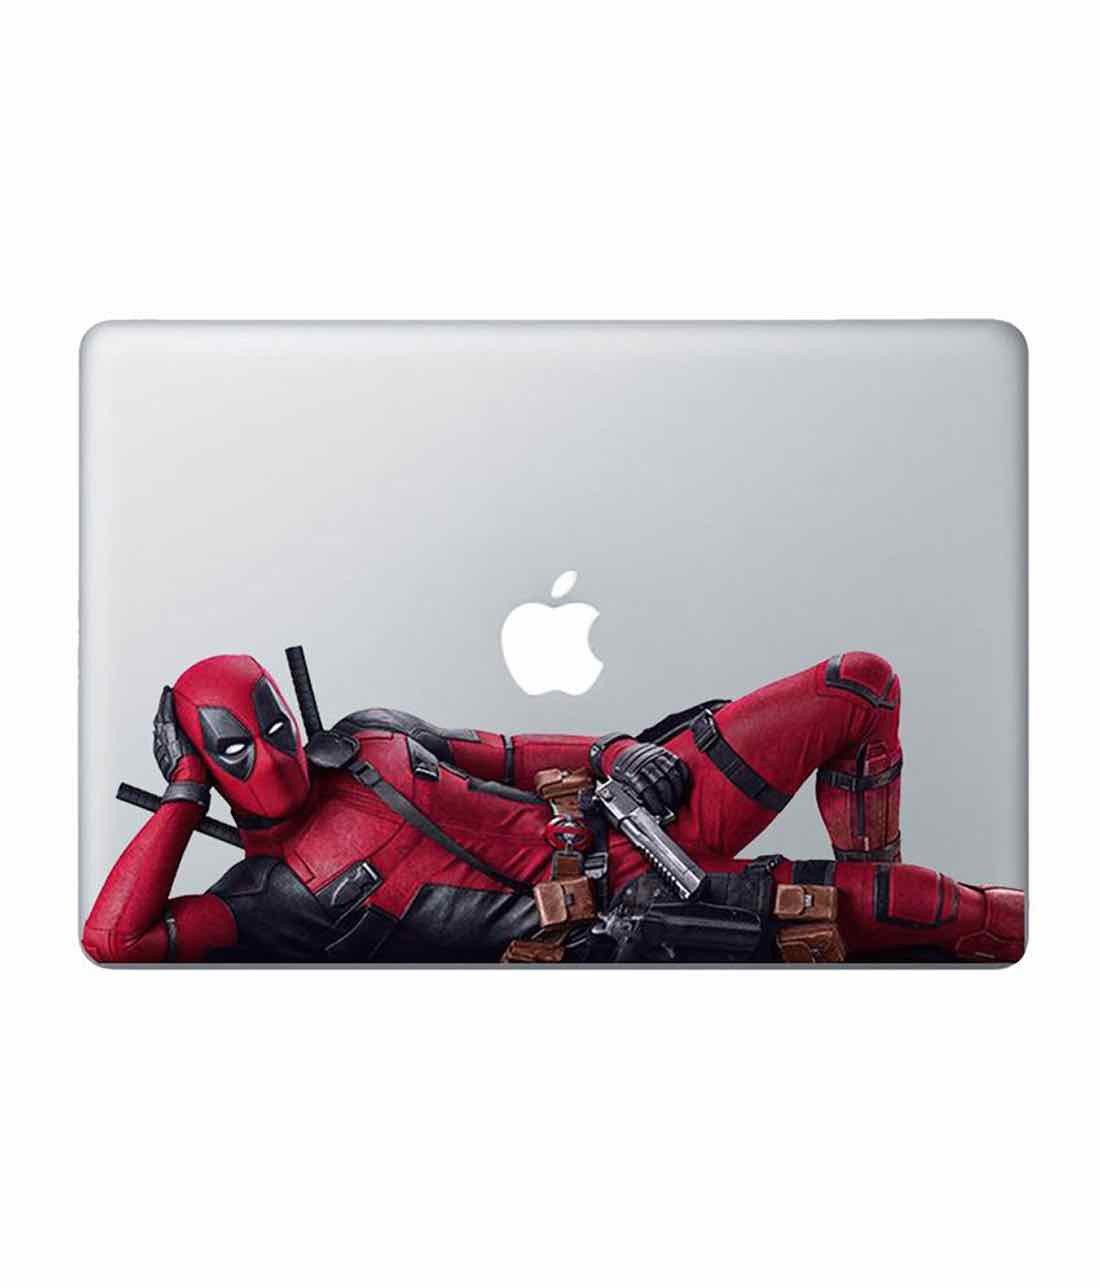 Deadpool Pose Laptop Decal by Macmerise -Macmerise - India - www.superherotoystore.com